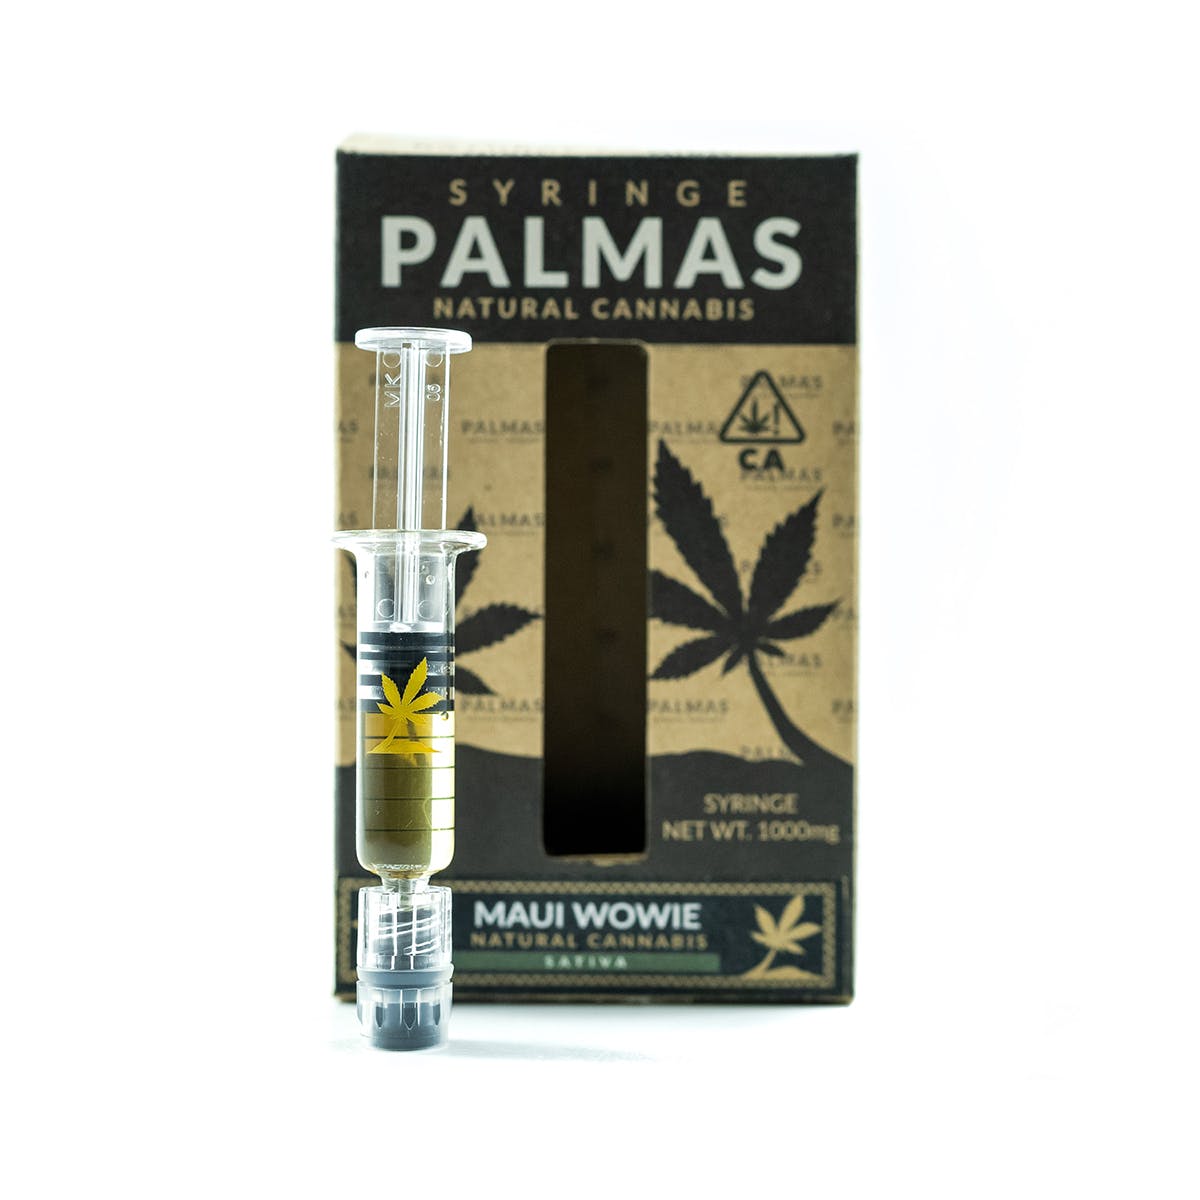 concentrate-palmas-cannabis-palmas-syringe-maui-wowie-1000mg